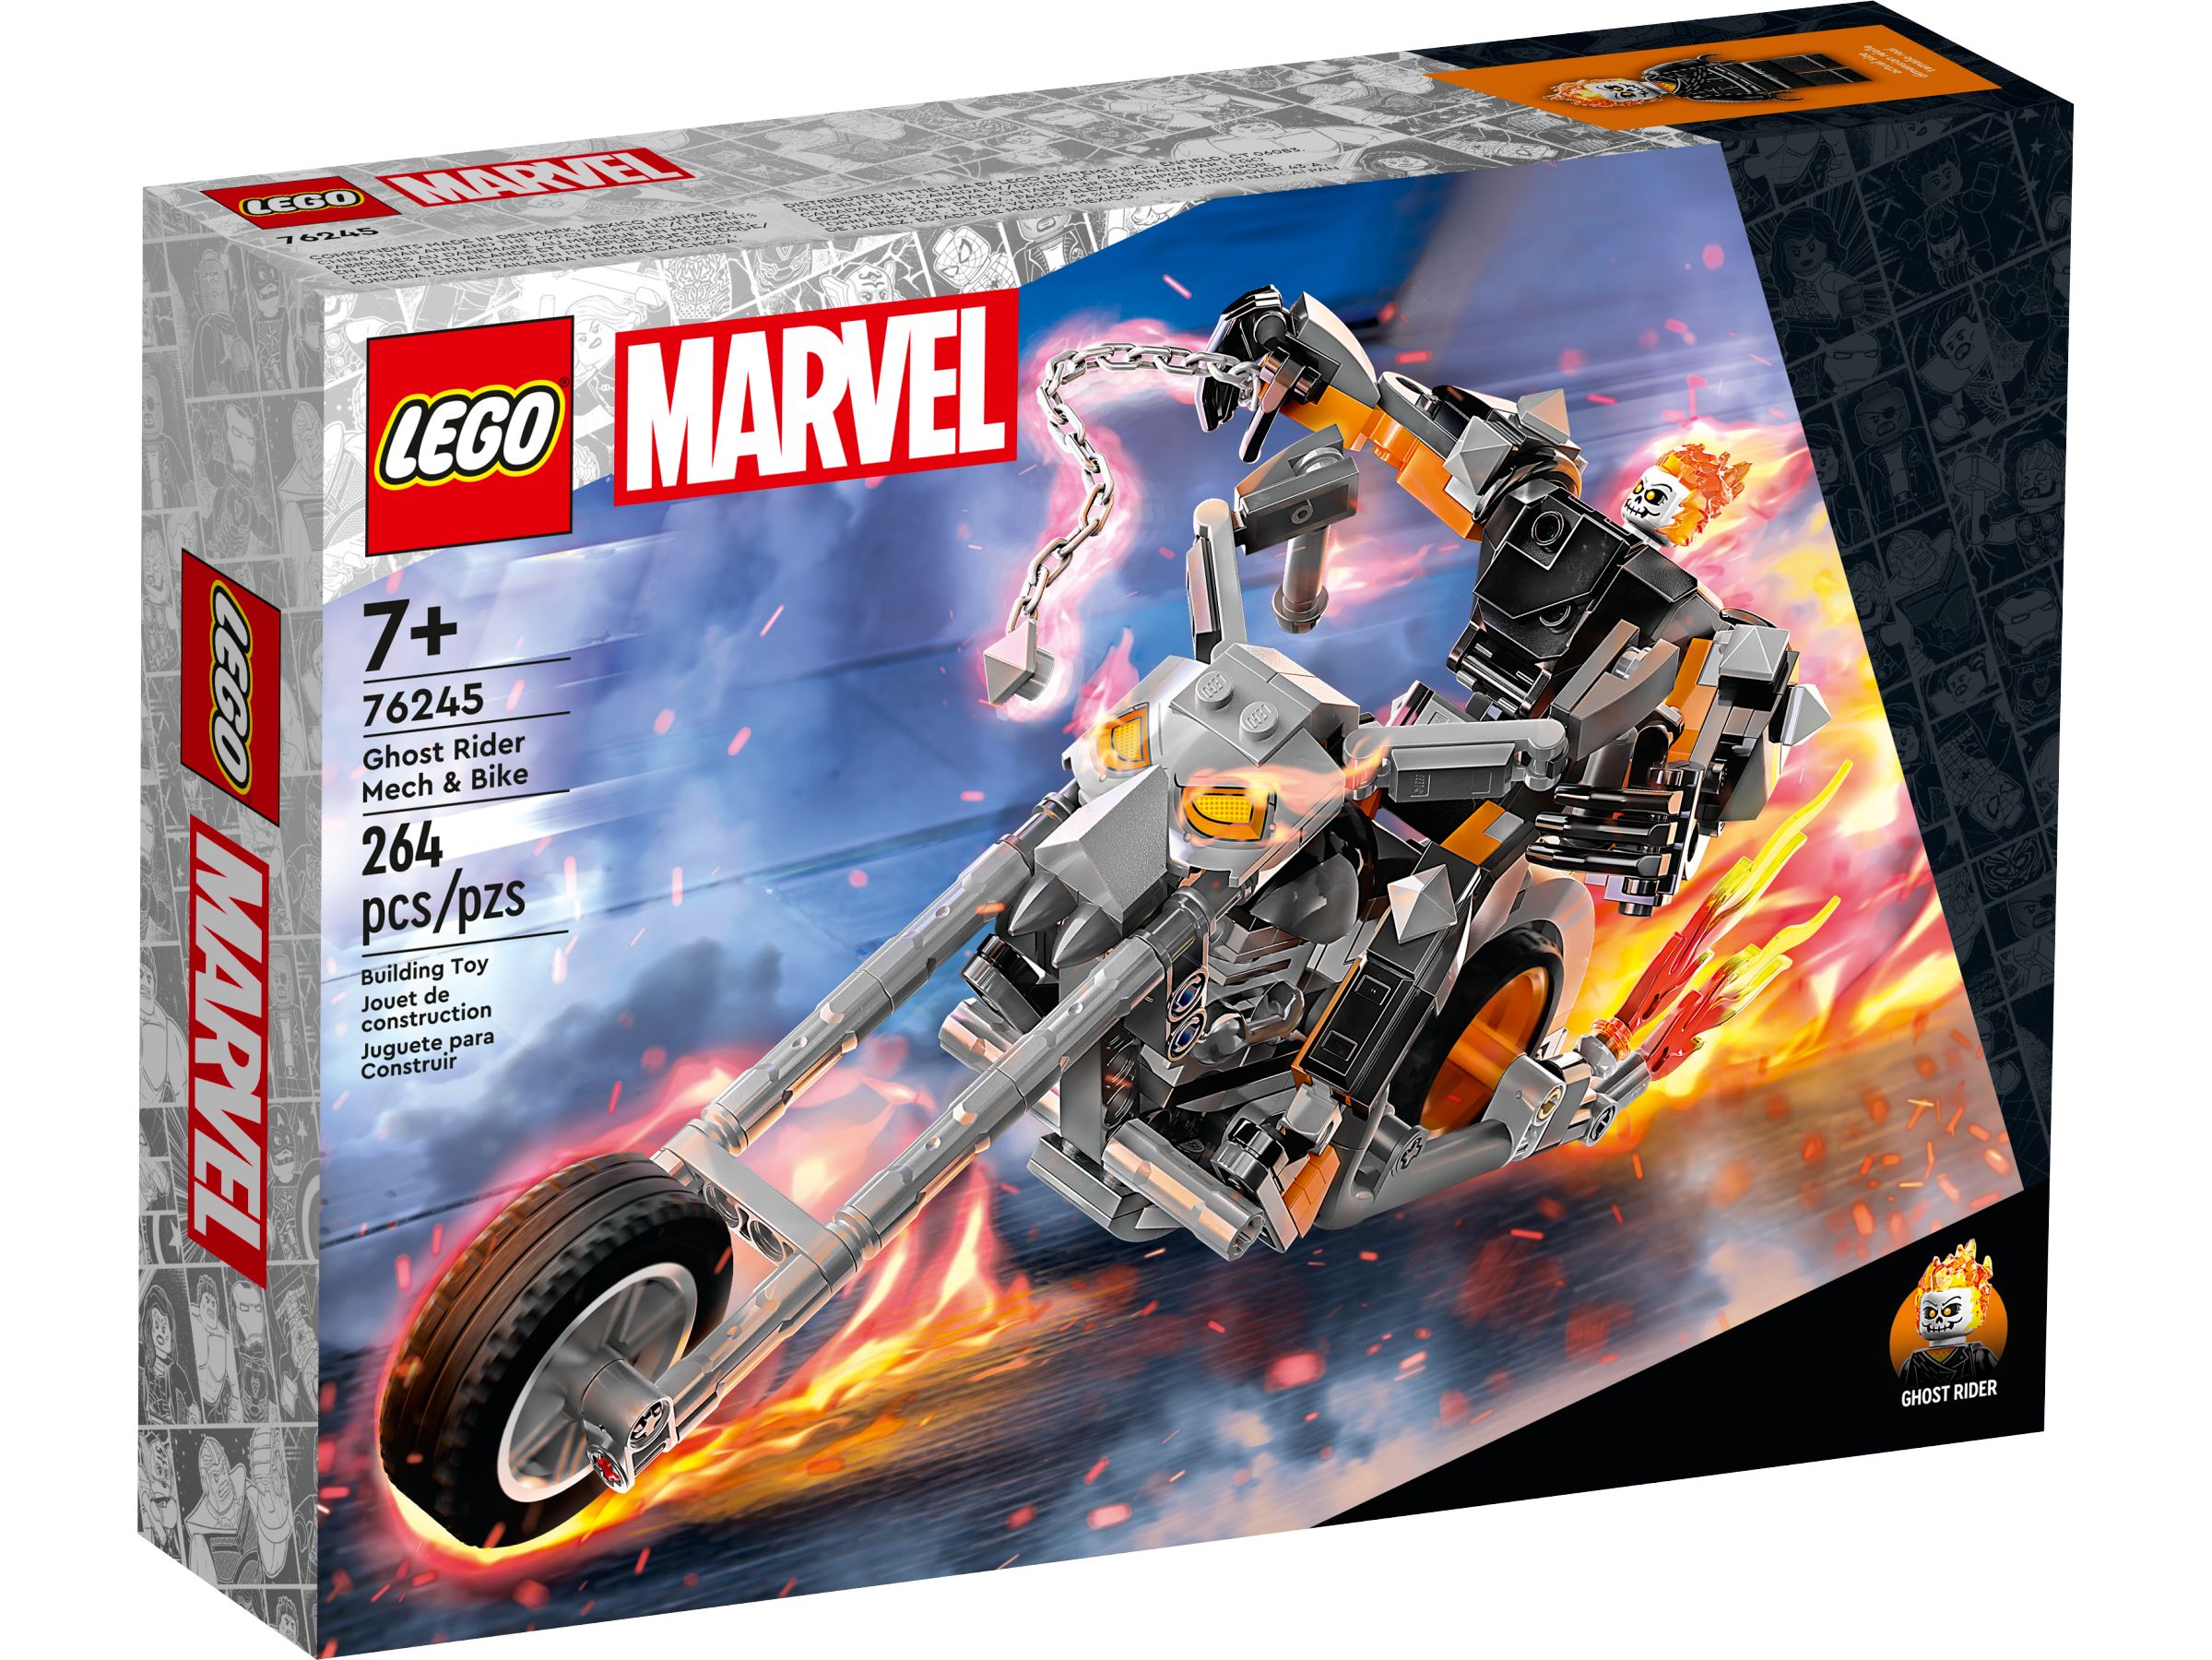 LEGO Super Heroes 76245 Ghost Rider mit Mech & Bike LEGO_76245_alt1.jpg